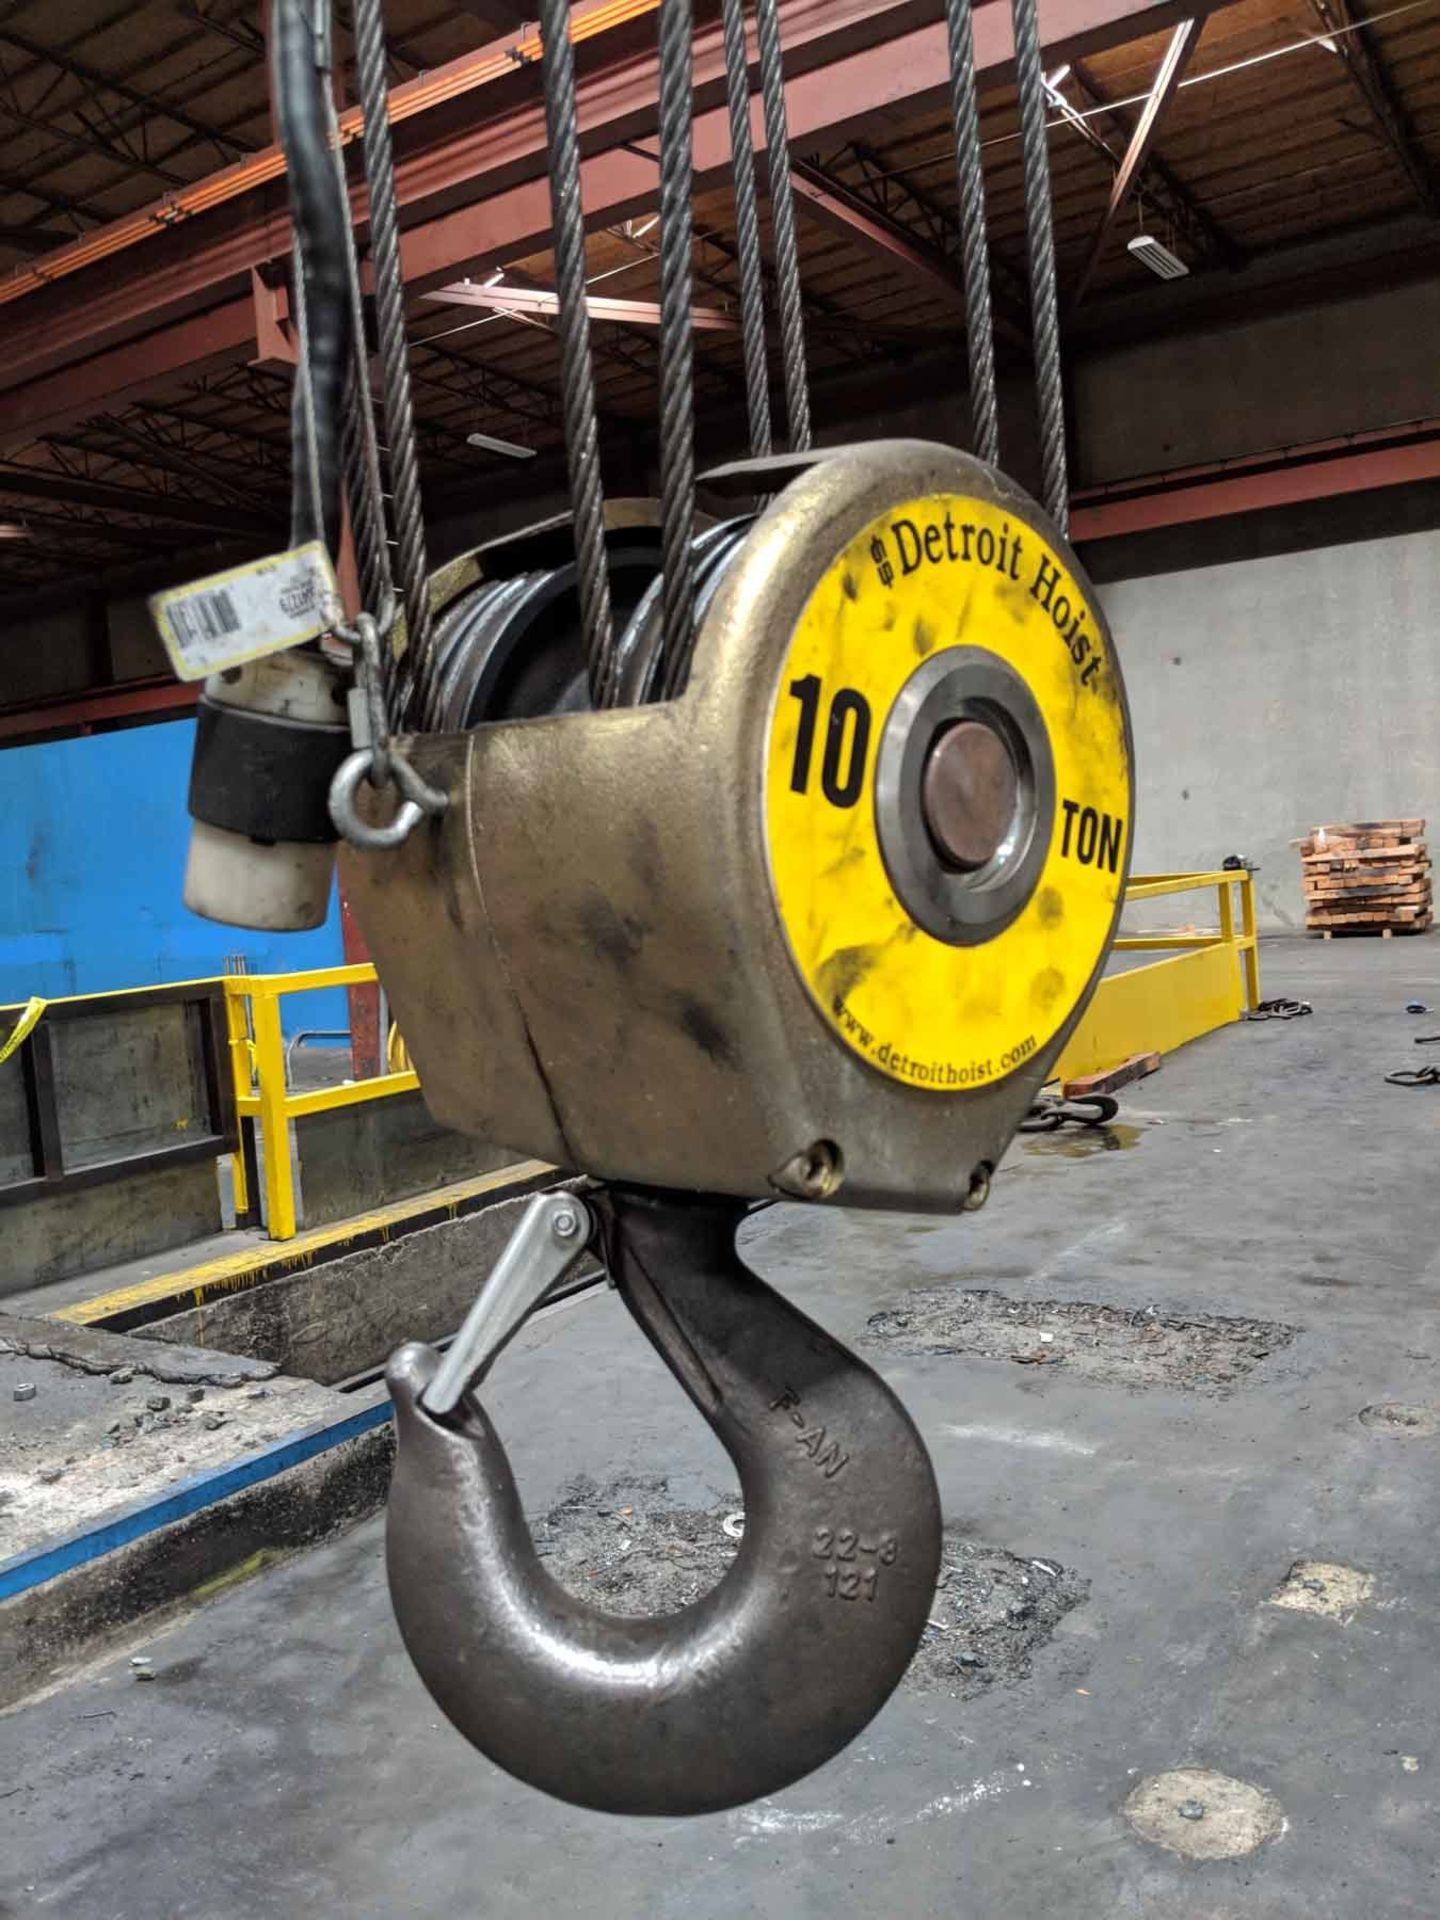 10-Ton Detroit Power Hoist and Trolley For Bridgecrane Material Handling Crane - Located In: Pomona,